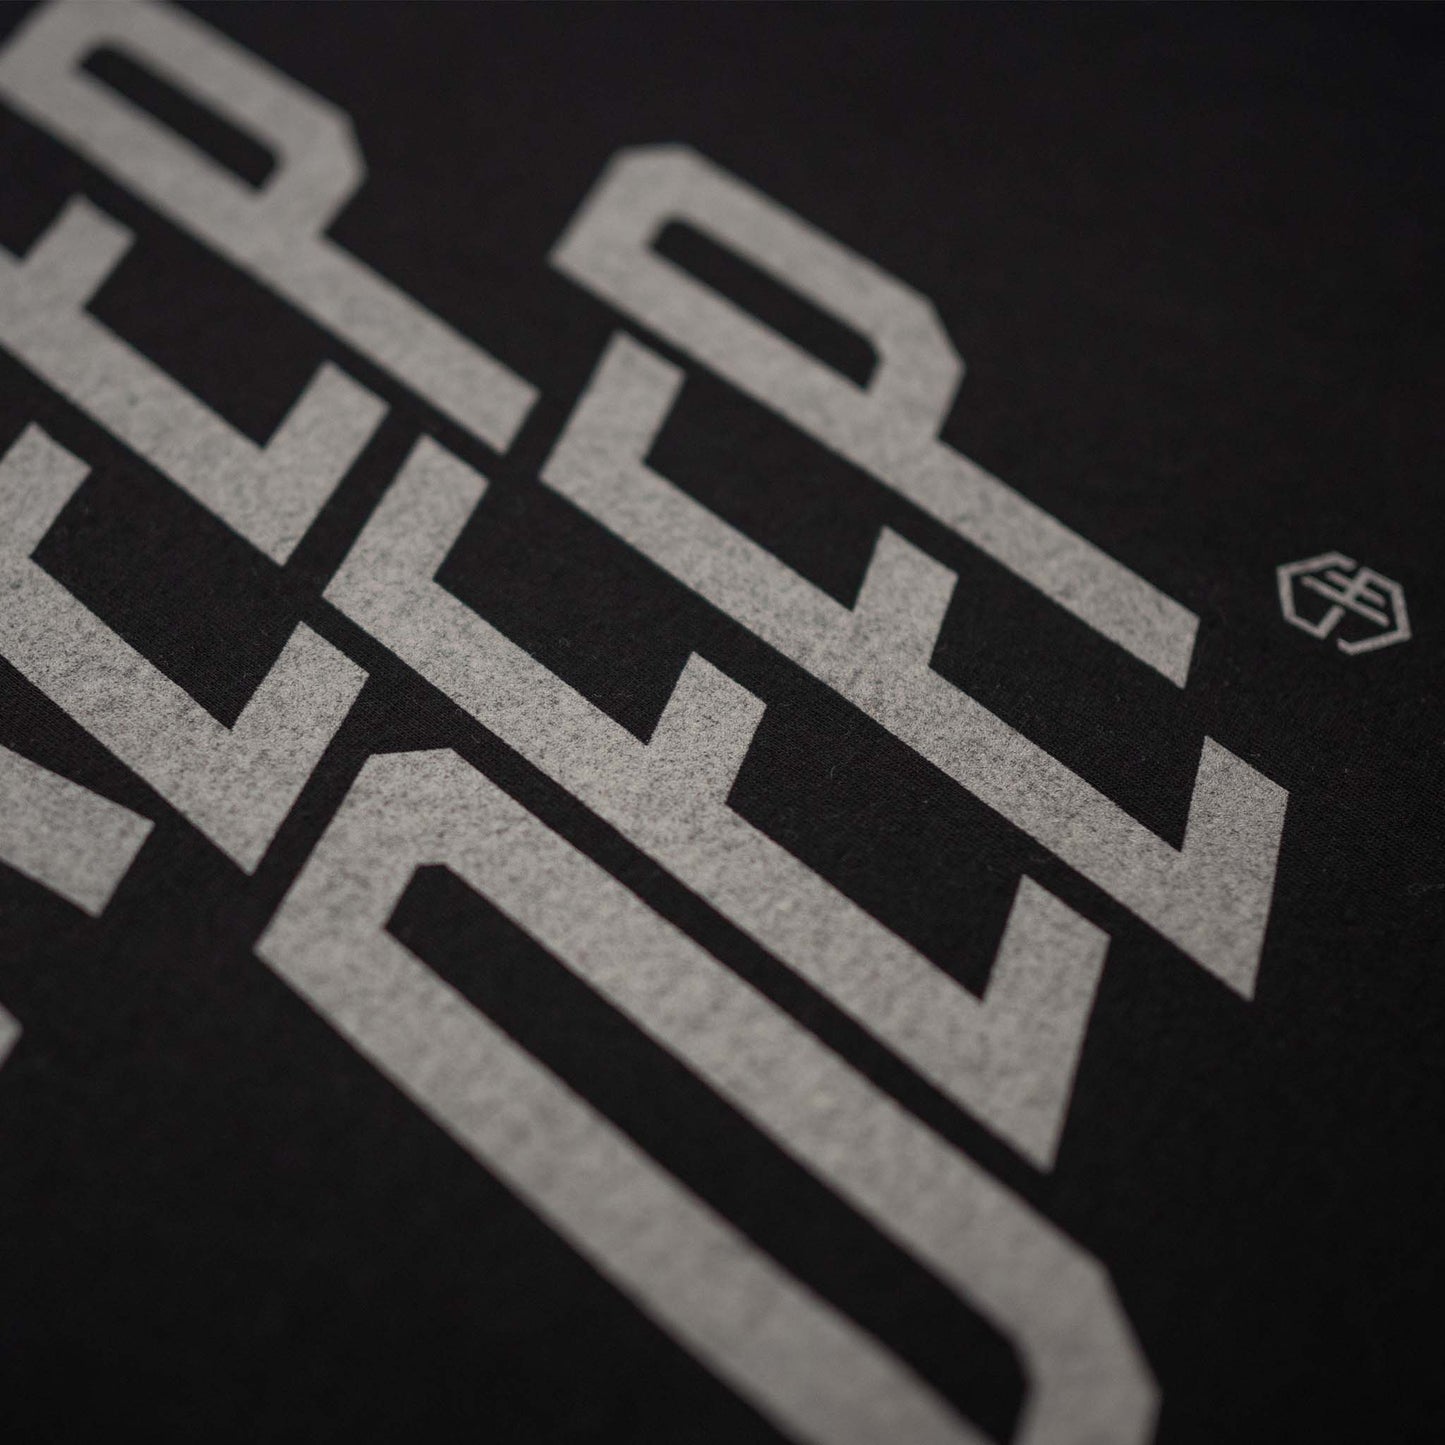 Keep Deep Black T-shirt detail of Silver Grey Typographic Design